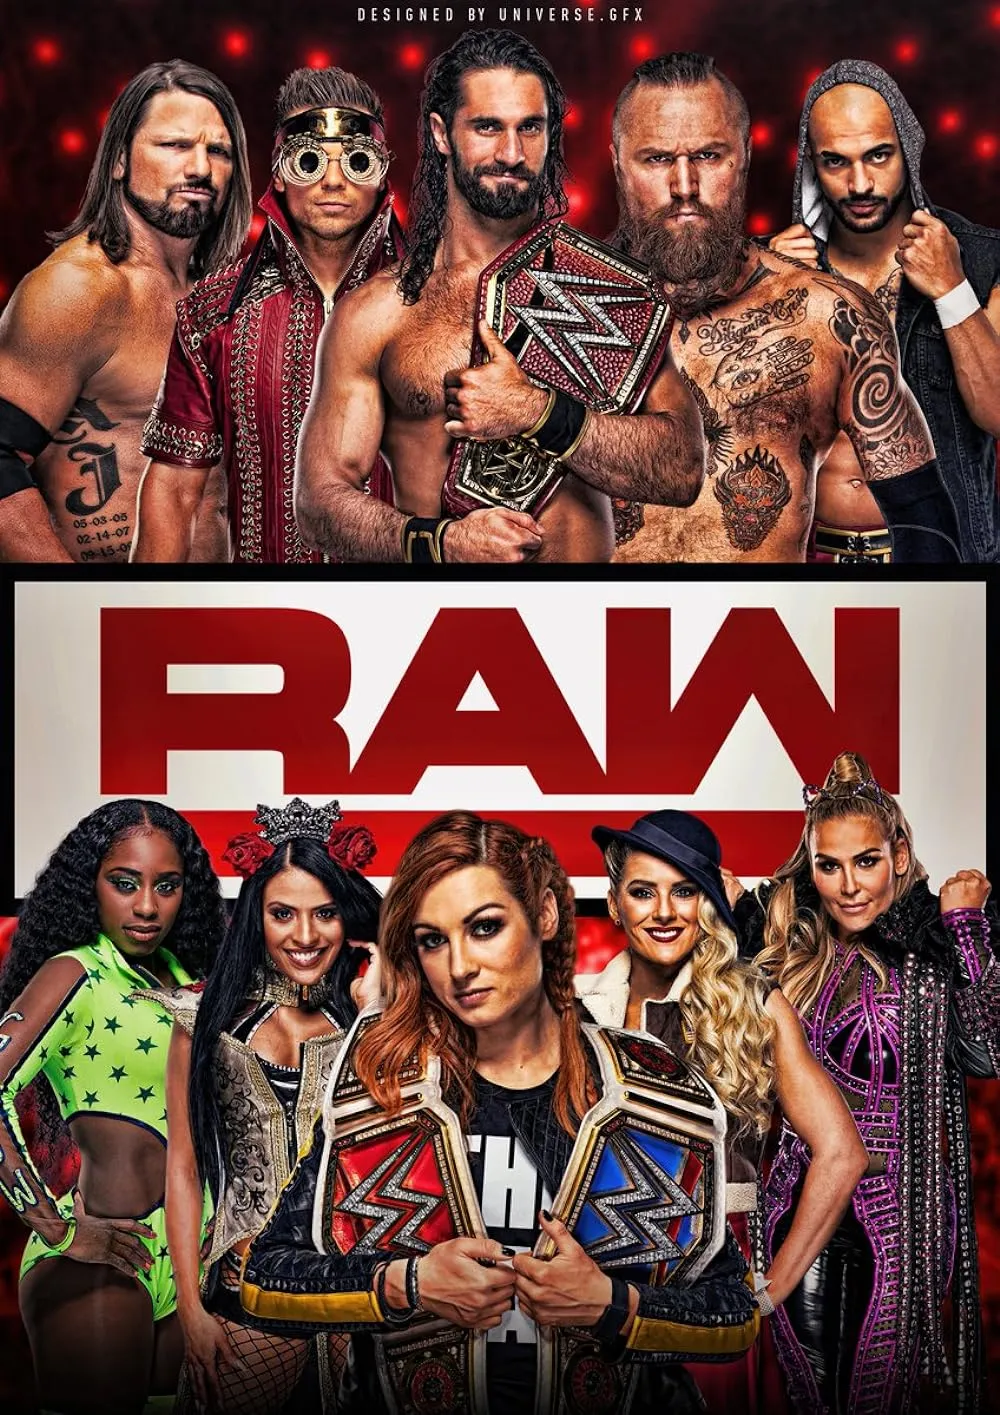 WWE Monday Night Raw (6 May 2024) English 720p HDTV 1.2GB | 500MB Download